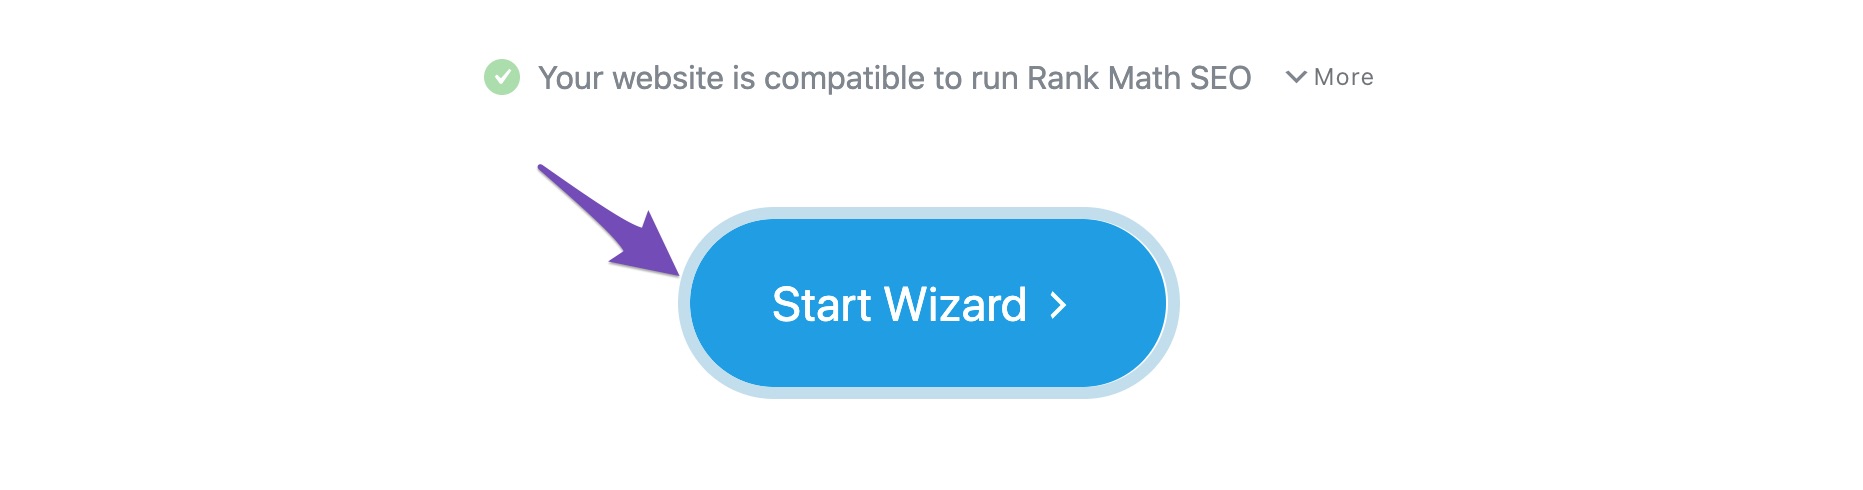 Start wizard to setup Rank Math